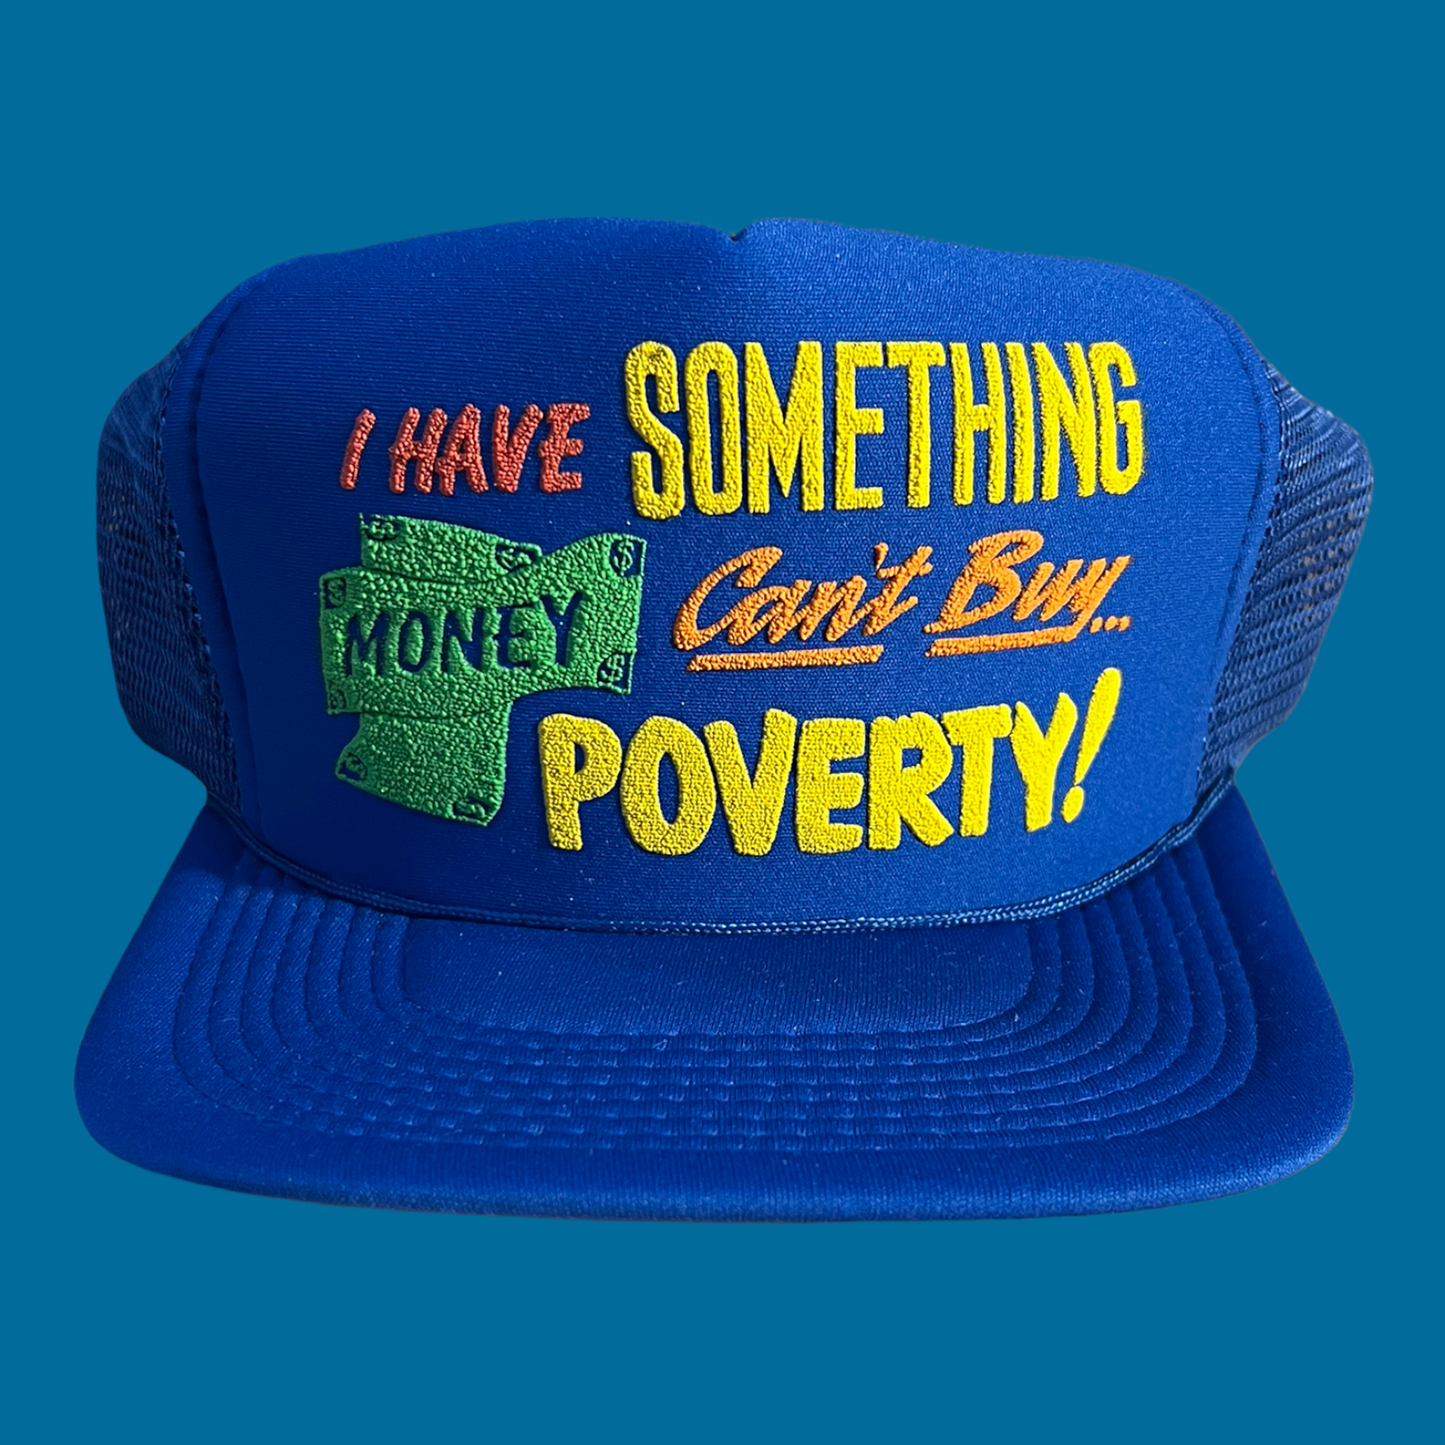 Vintage I Have Something Money Cant Buy.. Poverty! Trucker Hat Funny Trucker Hat Black/White